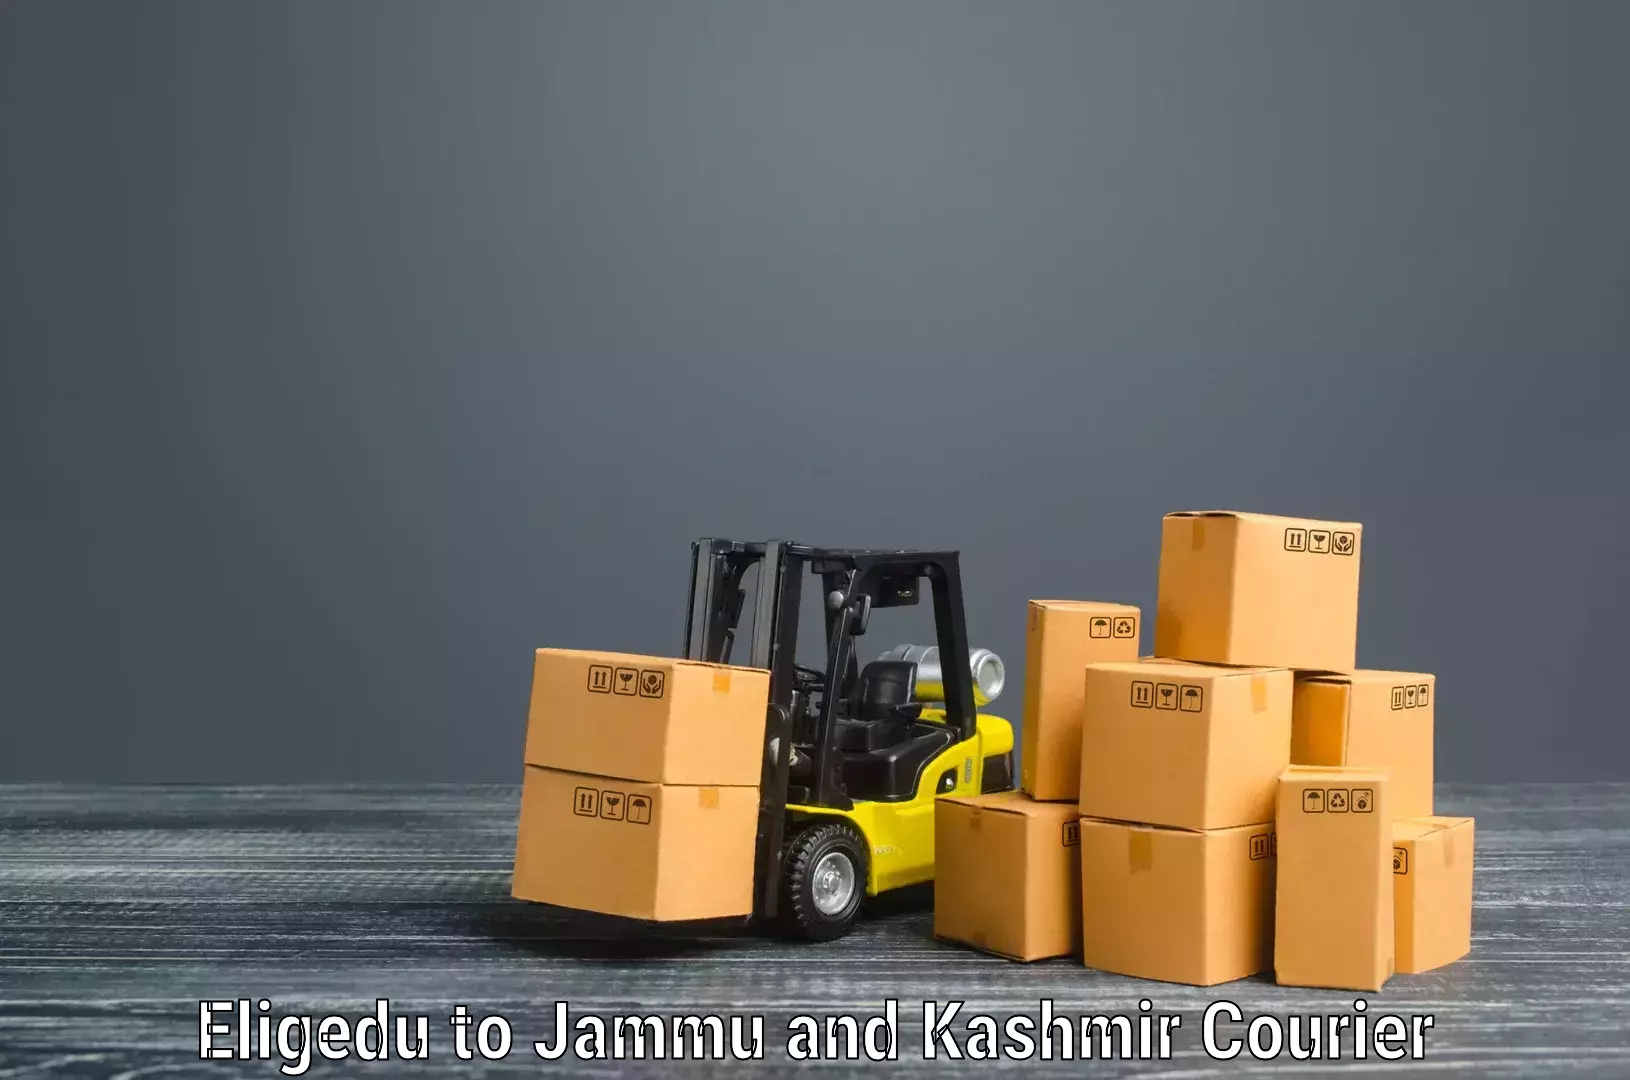 Furniture moving assistance Eligedu to Jammu and Kashmir